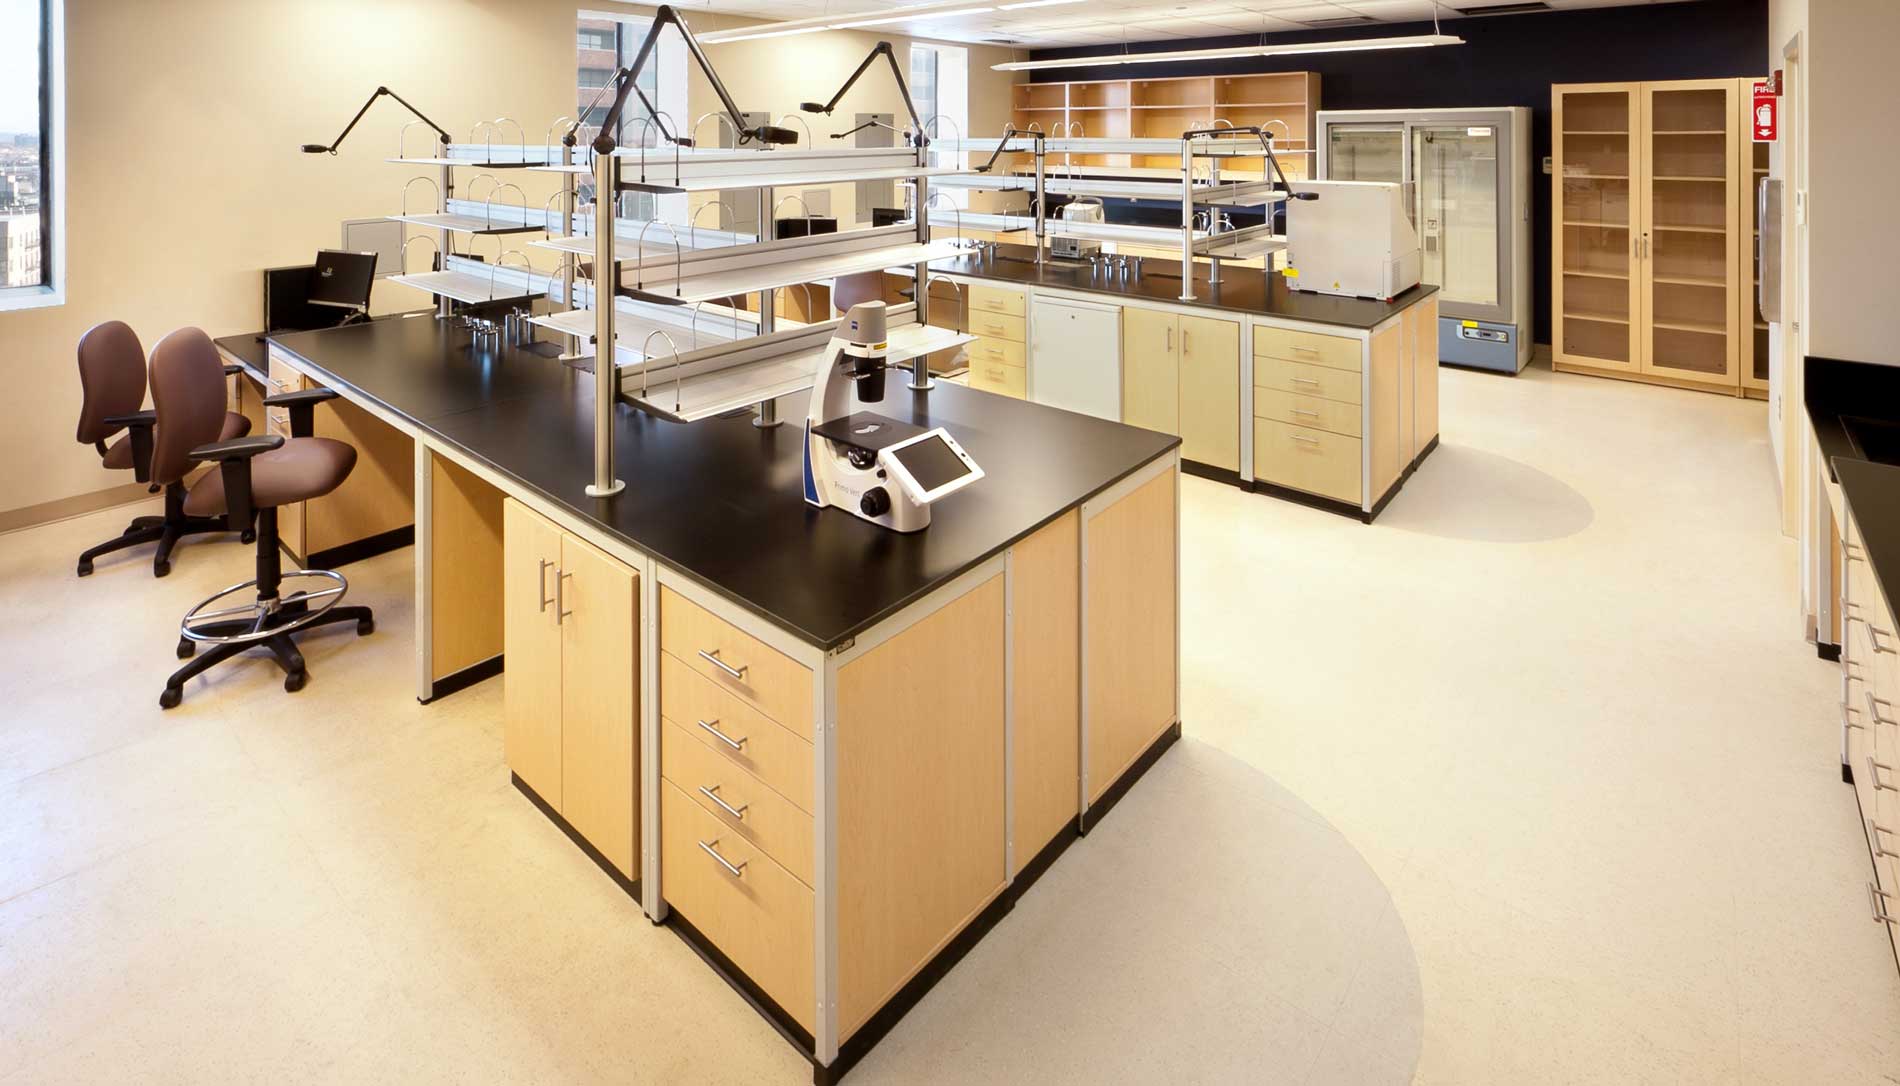 Lab Design background image of empty lab